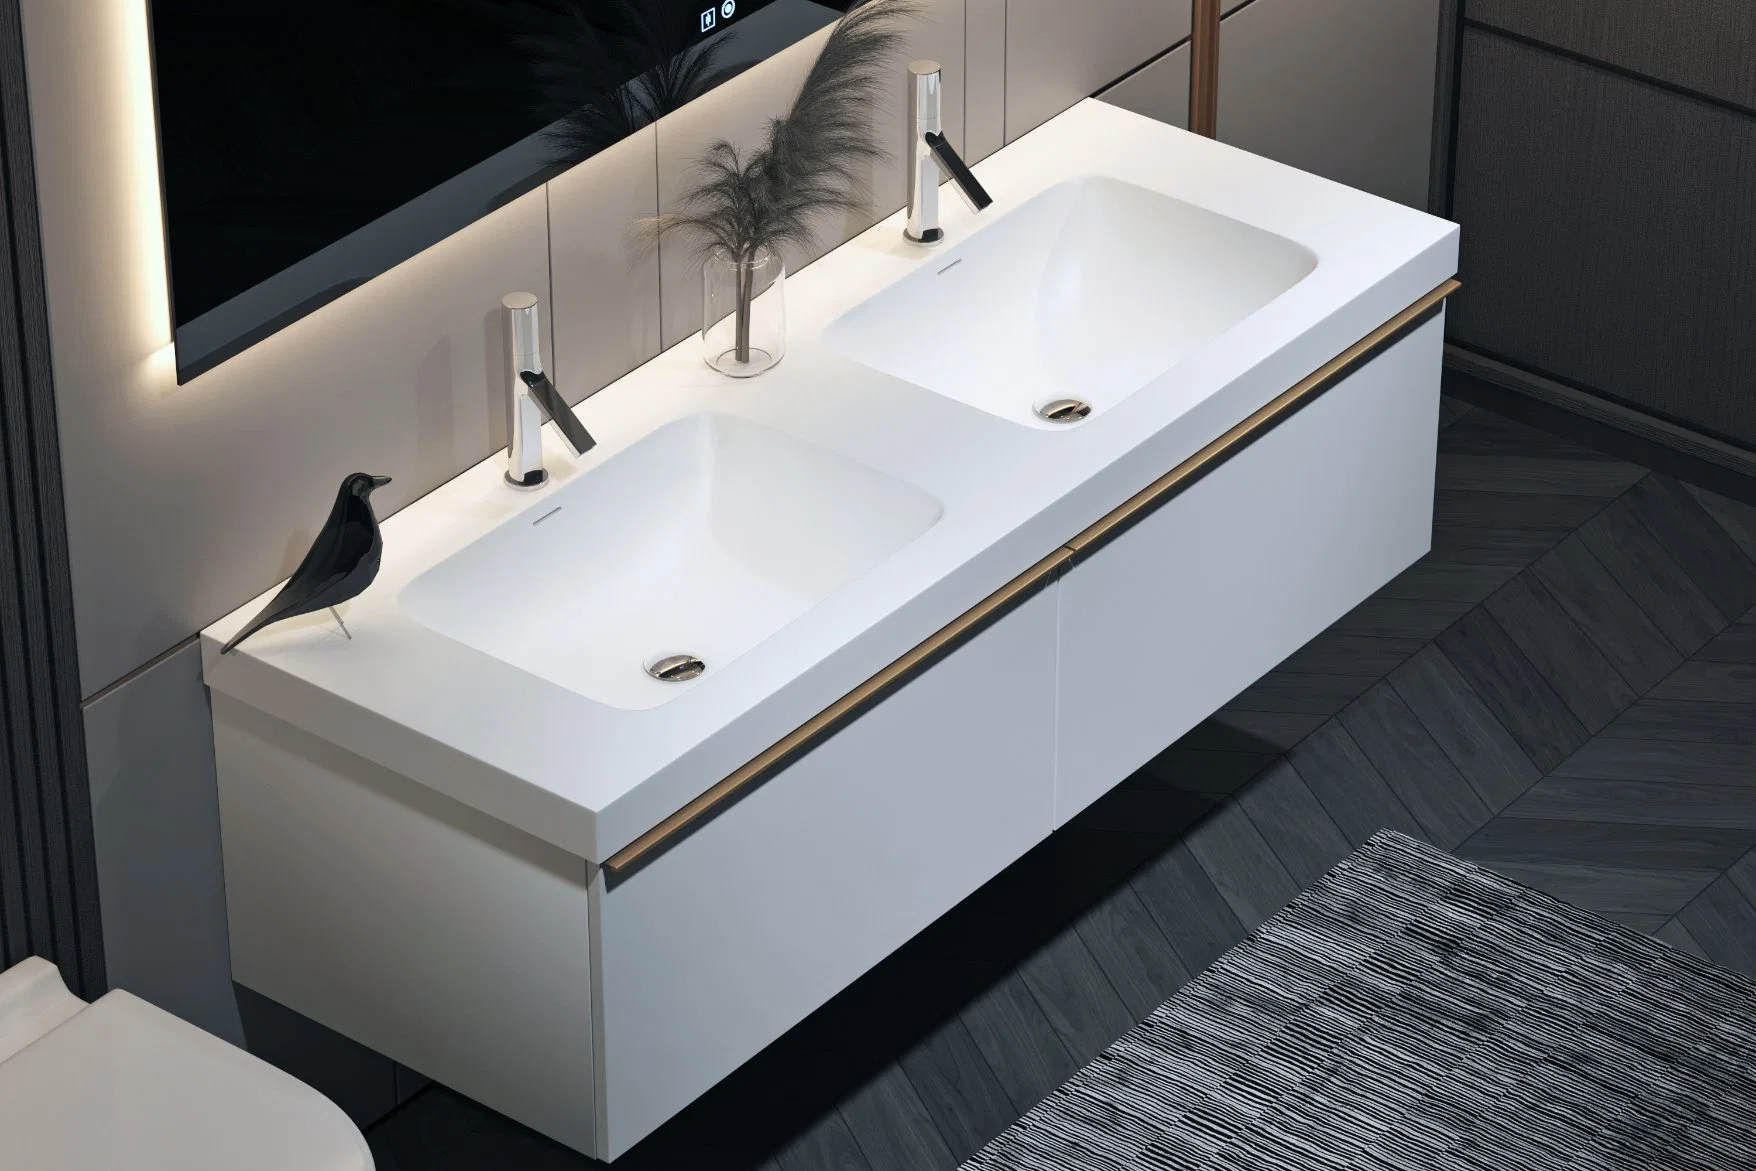 Aesthetic Fashion Double Sinks Designs Decor on Bathroom Vanities